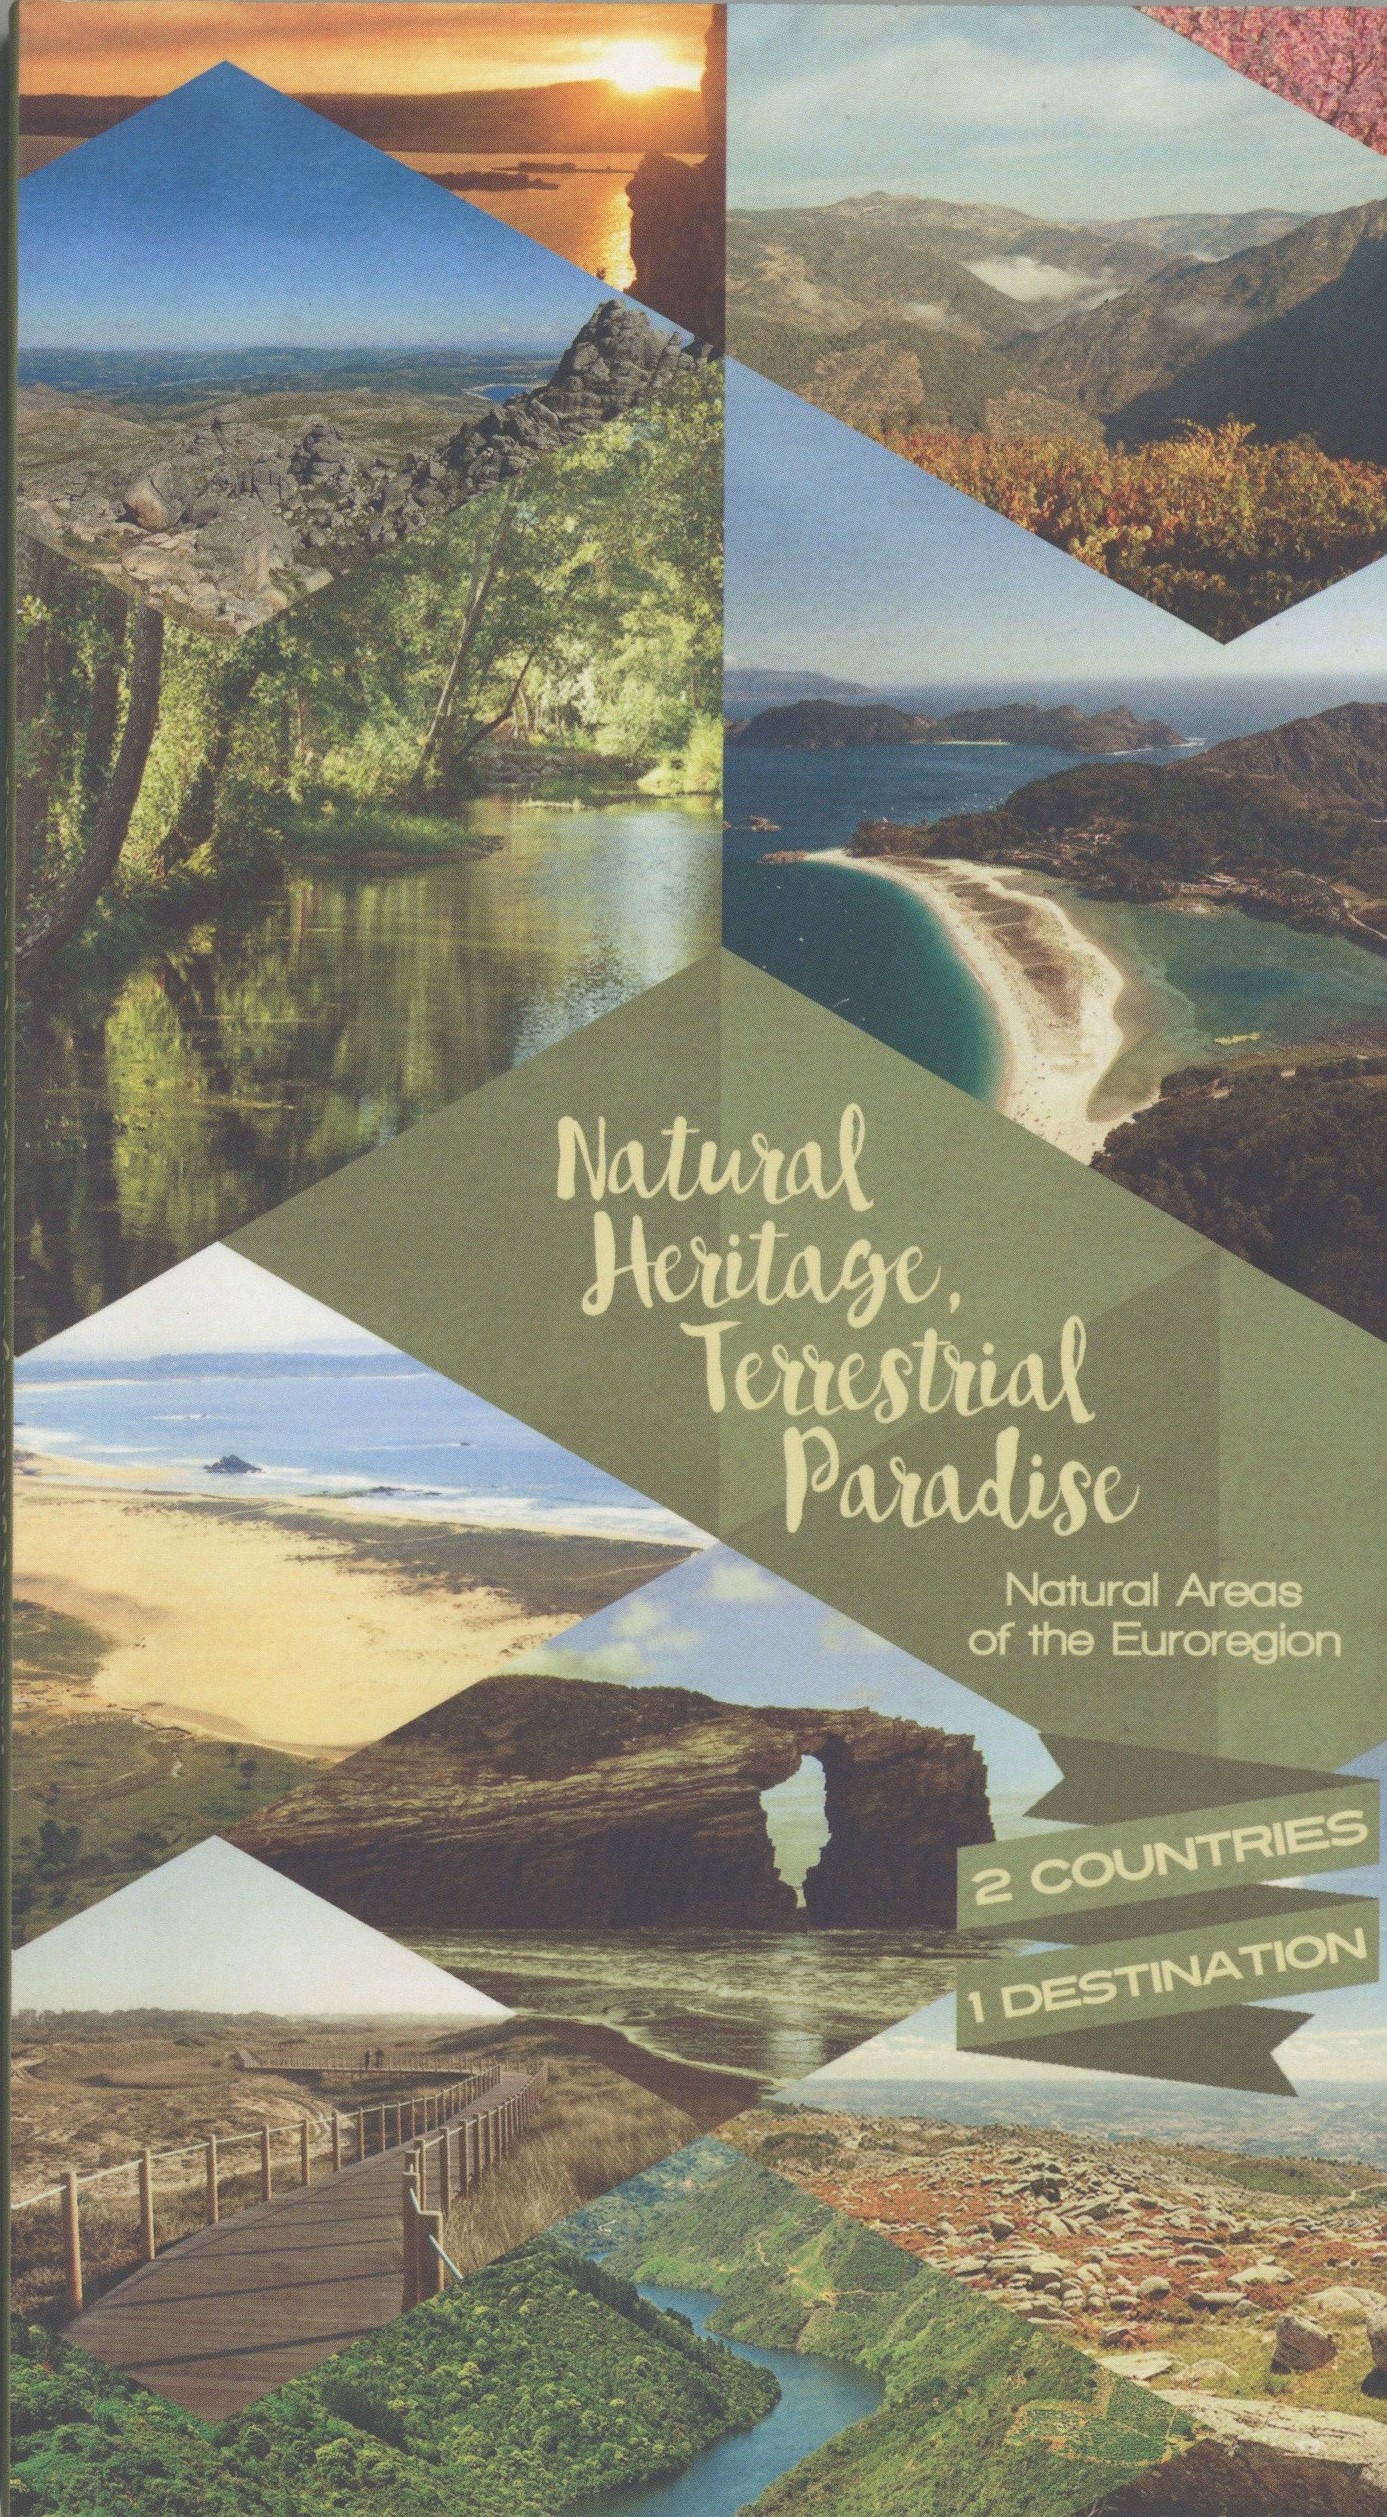 Natural heritage, Terrestrial Paradise. 2 countries, 1 destination